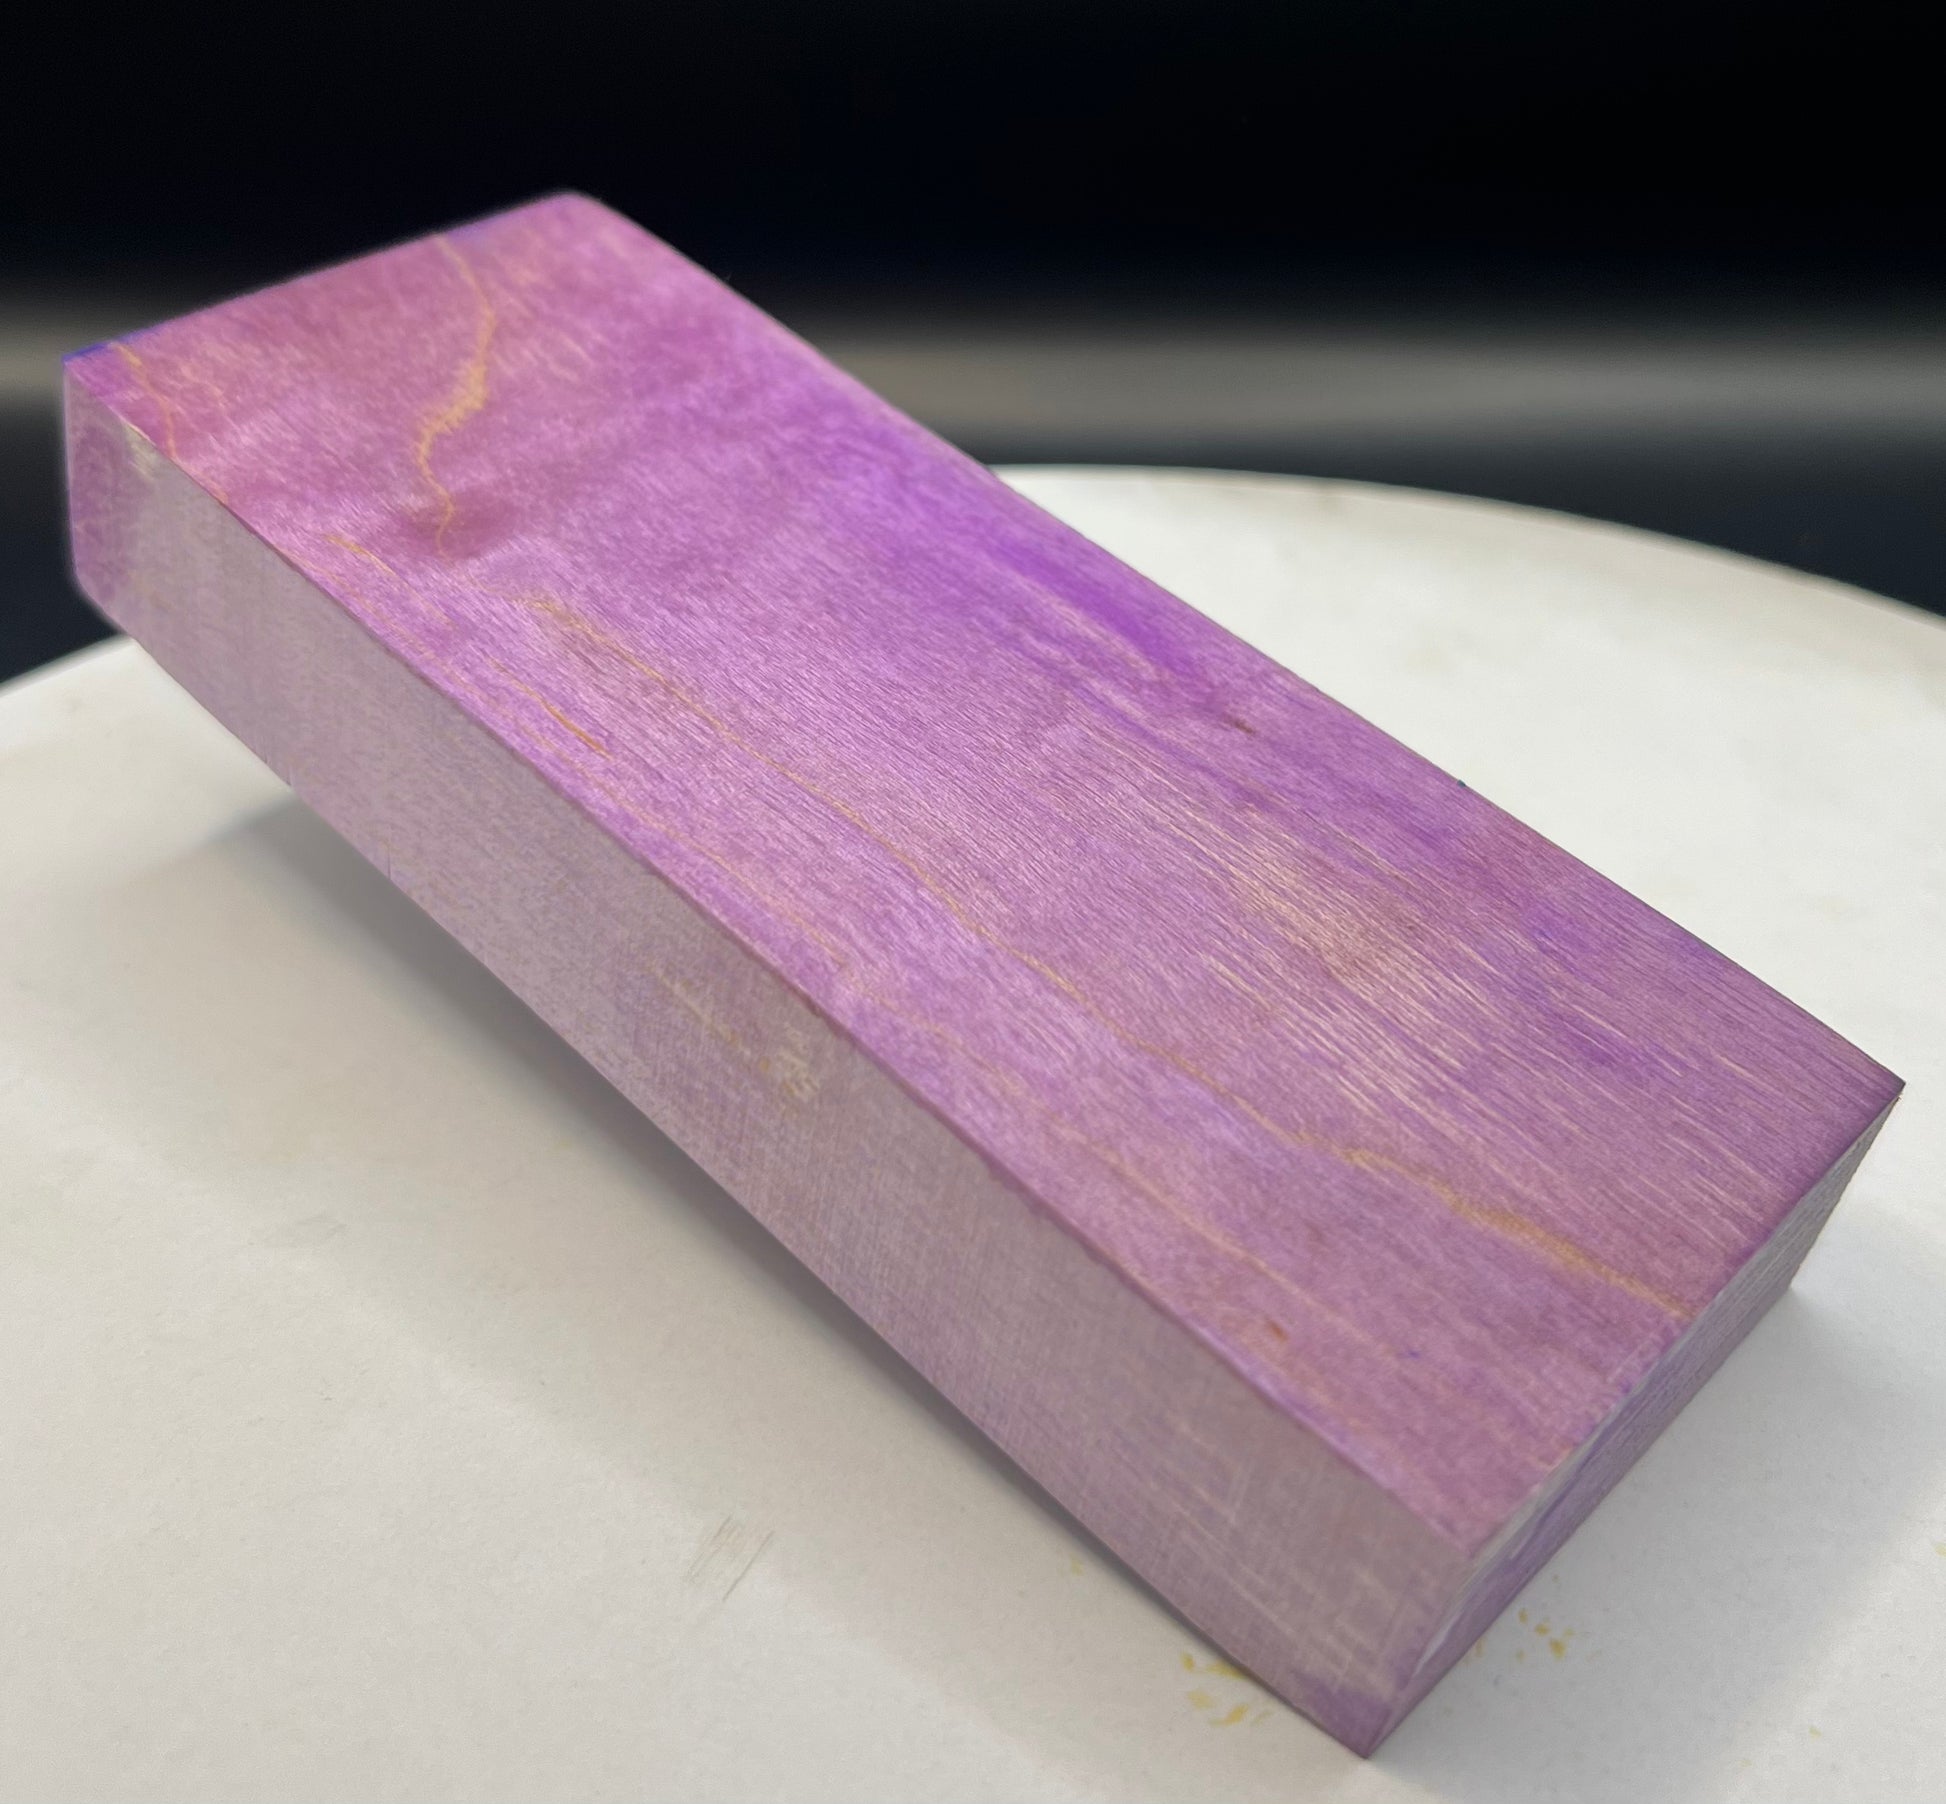 Stabilized Curly Maple Knife Block Light Purple